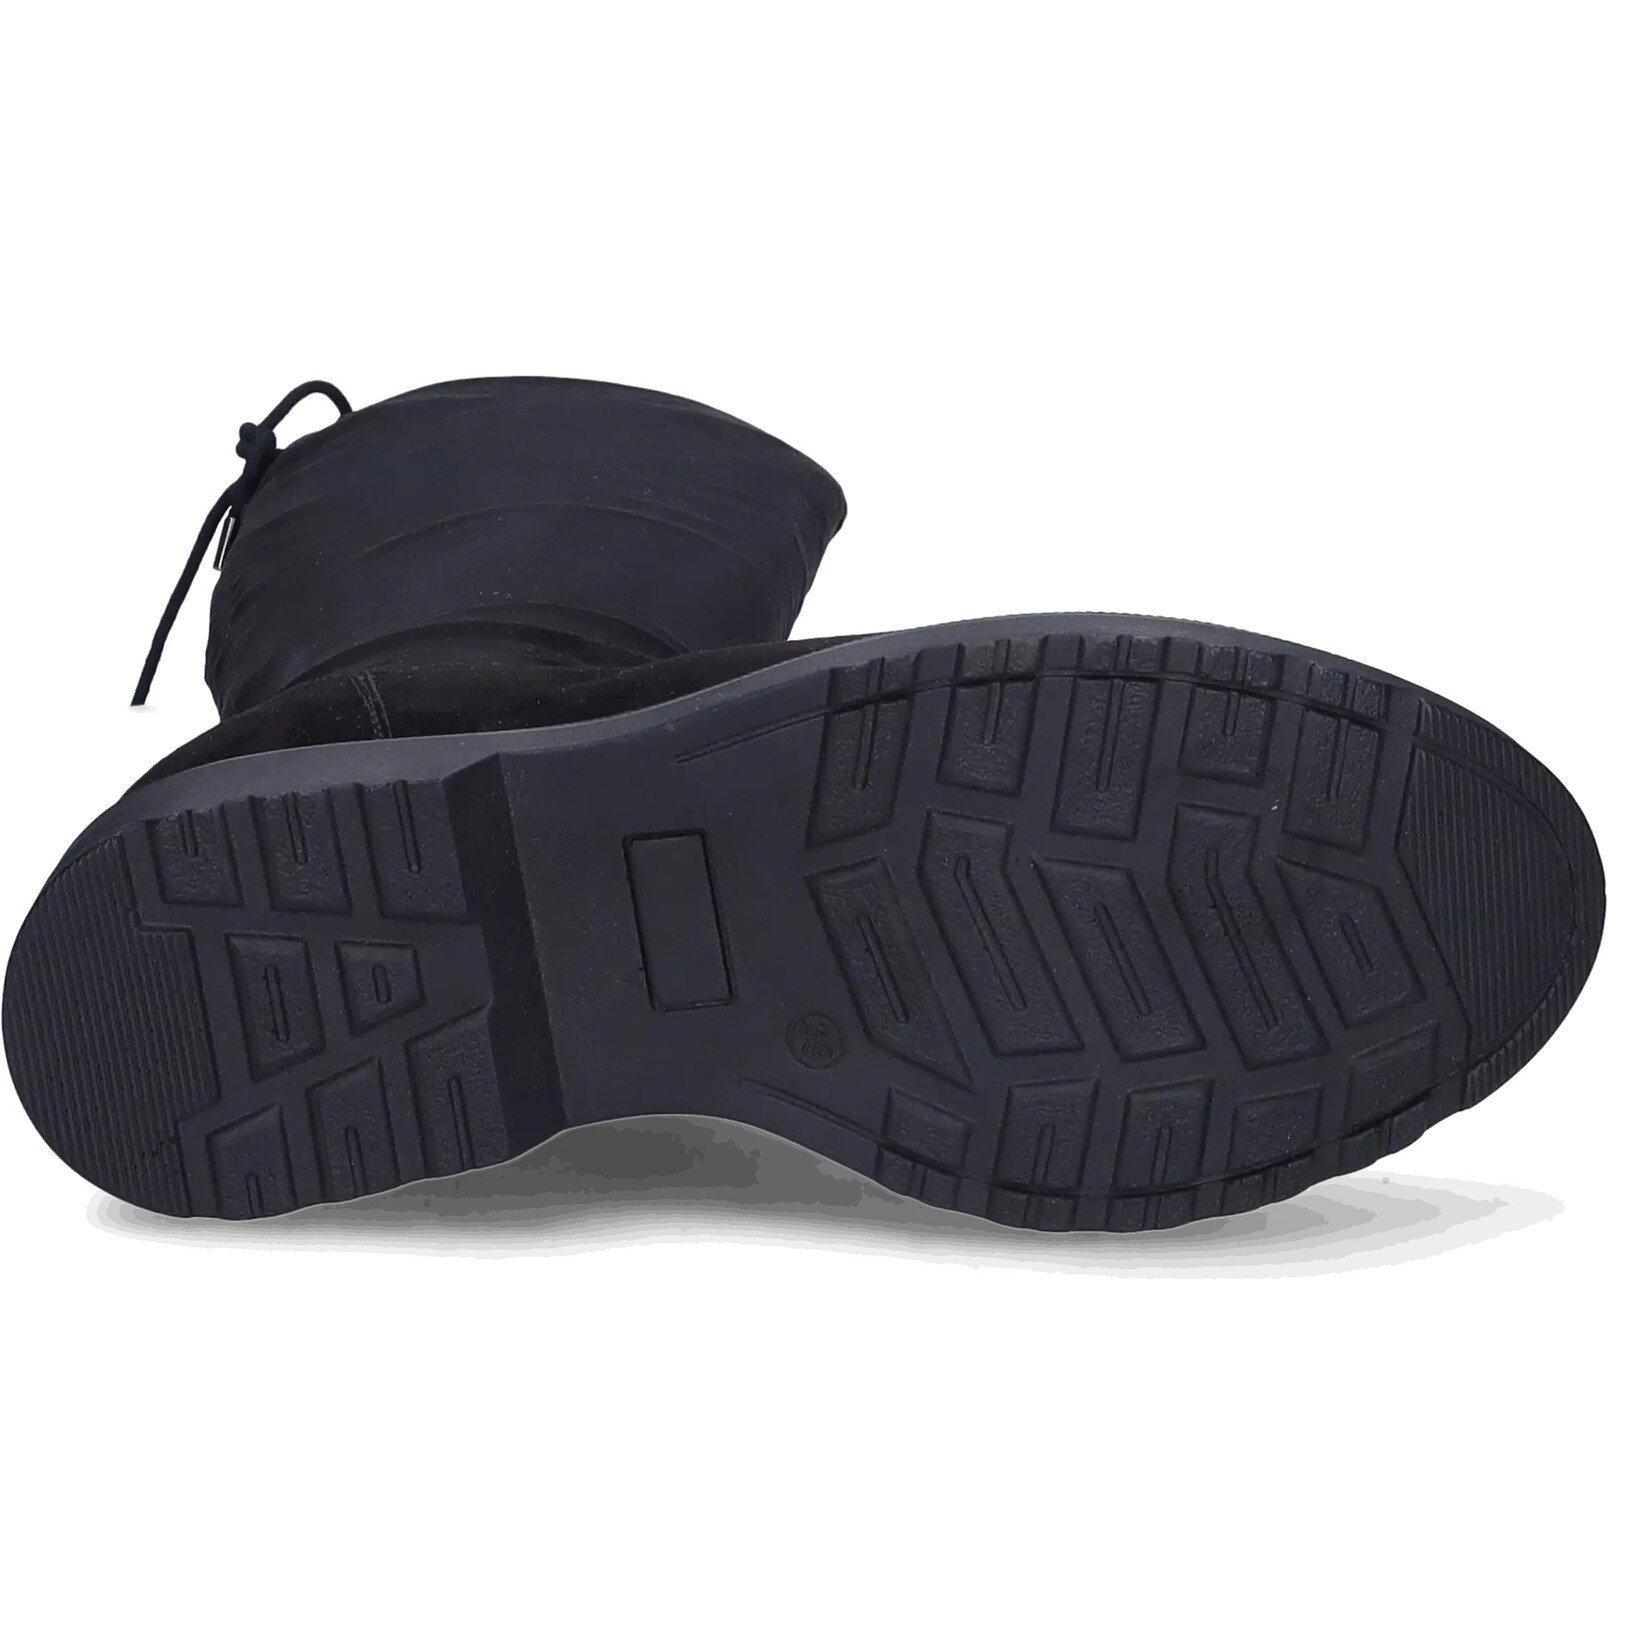 JJ Footwear Kelslo - Black